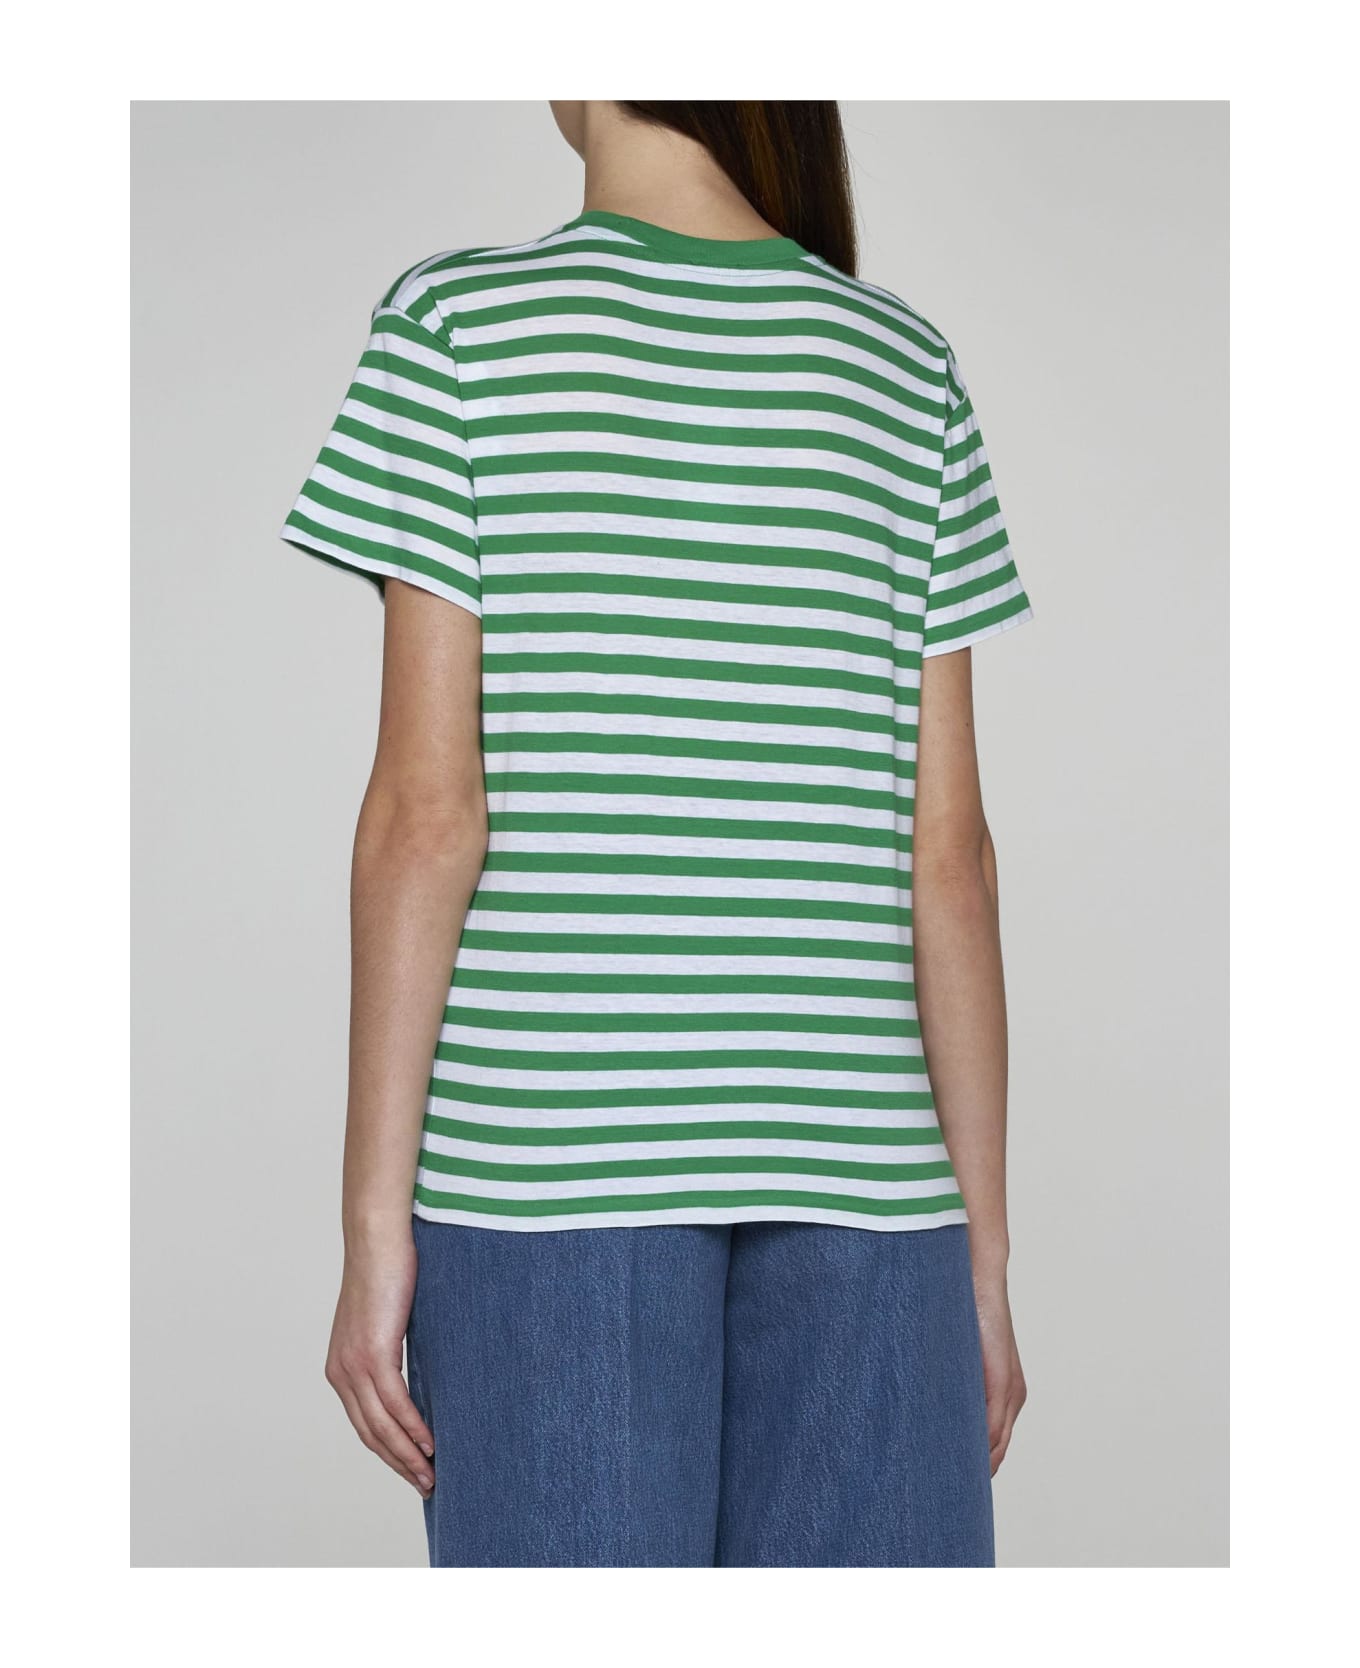 Polo Ralph Lauren Striped Cotton T-shirt - PREPPYGREENWHITE